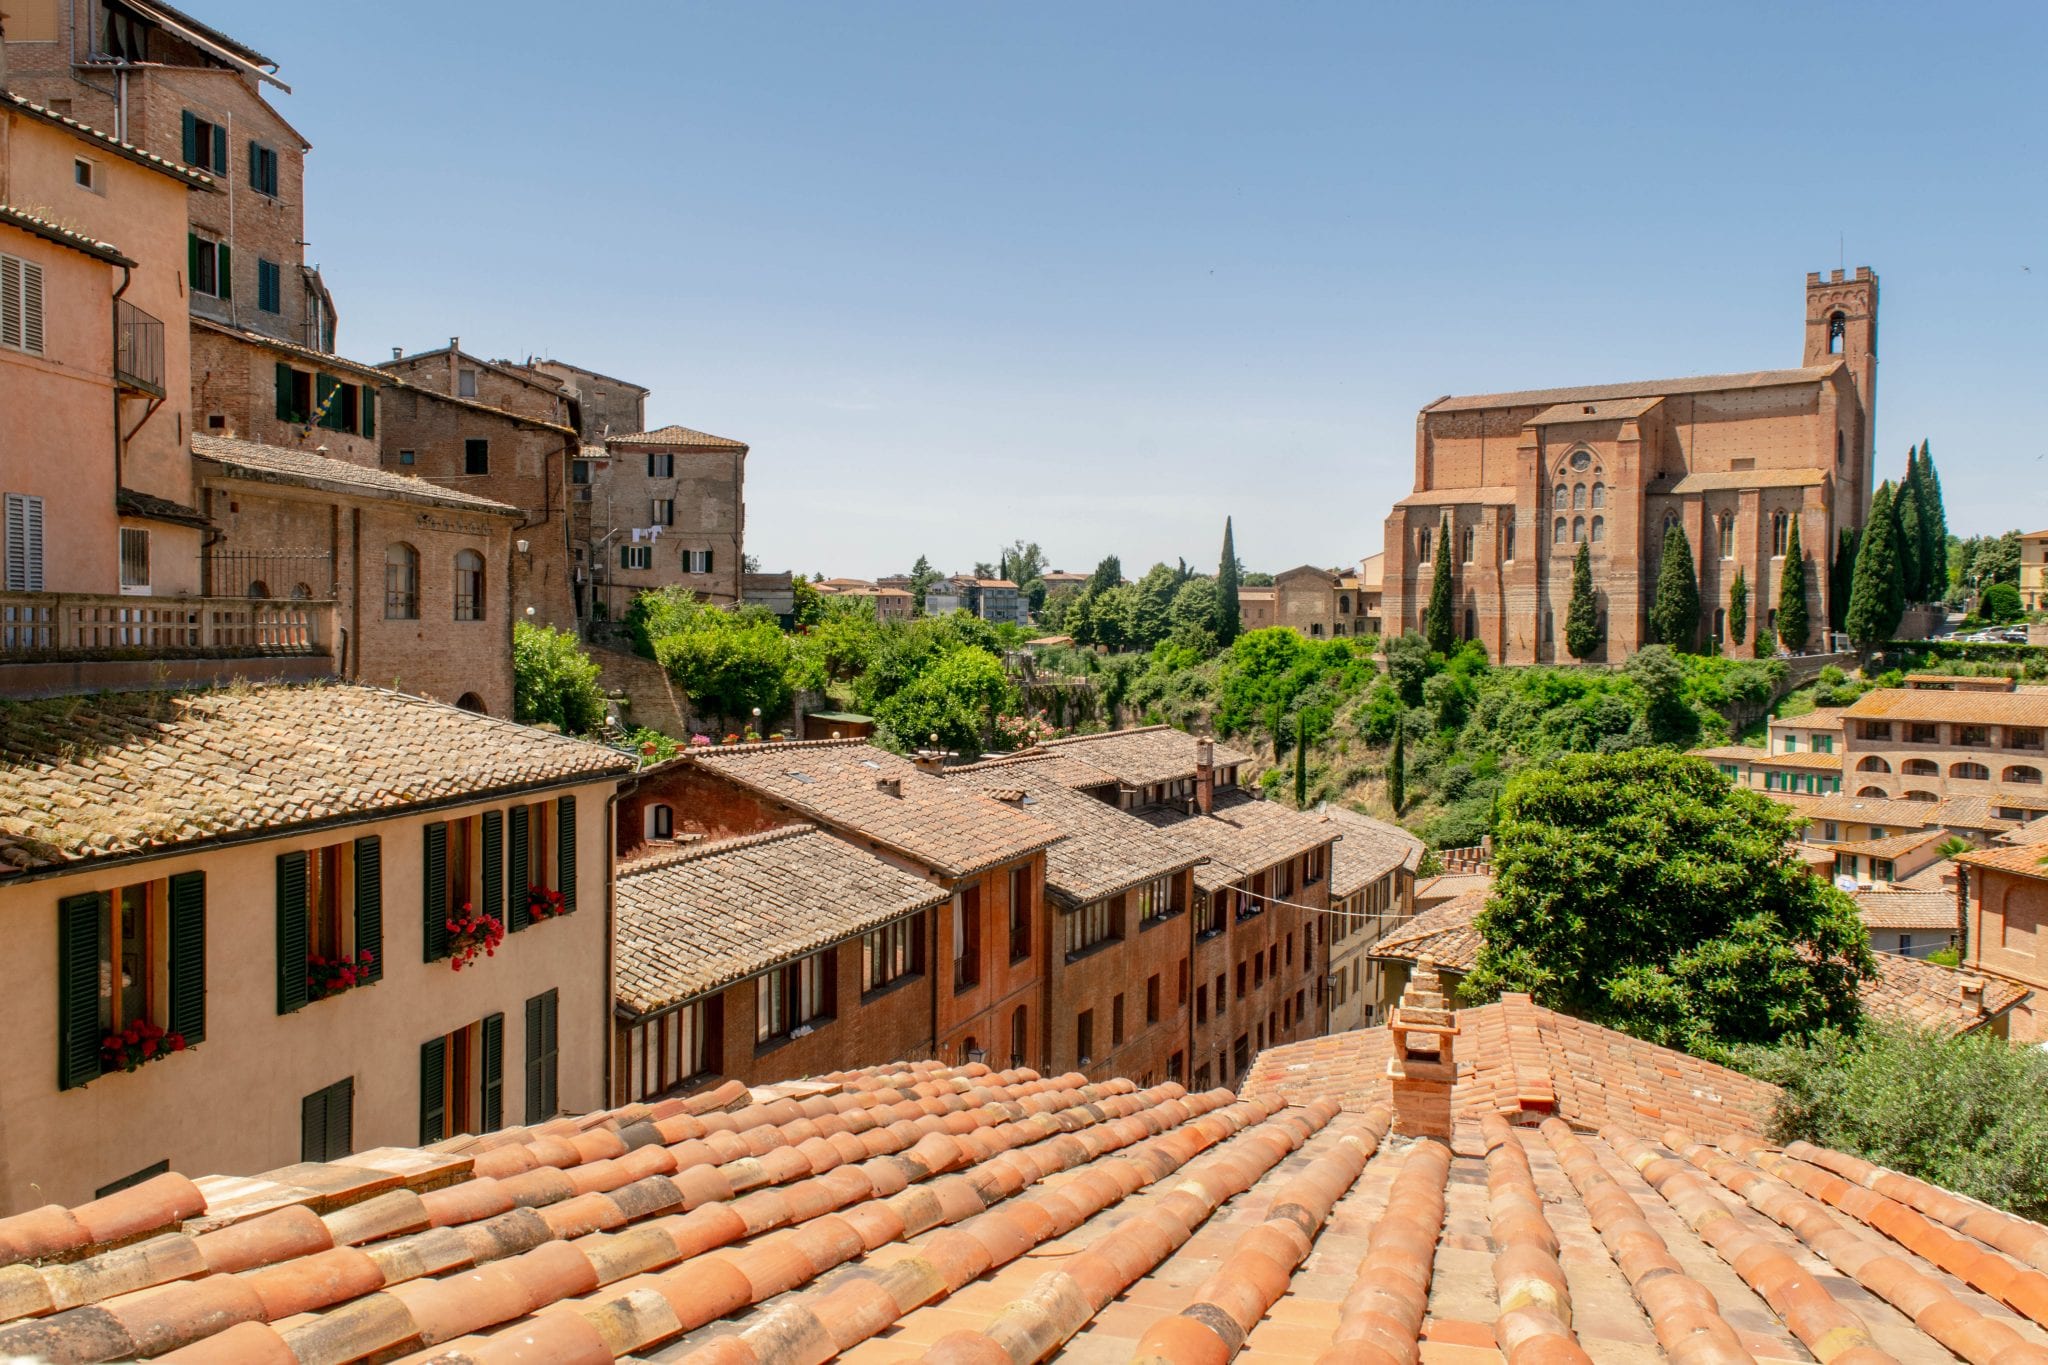 Tuscany Honeymoon: Rooftops of Siena